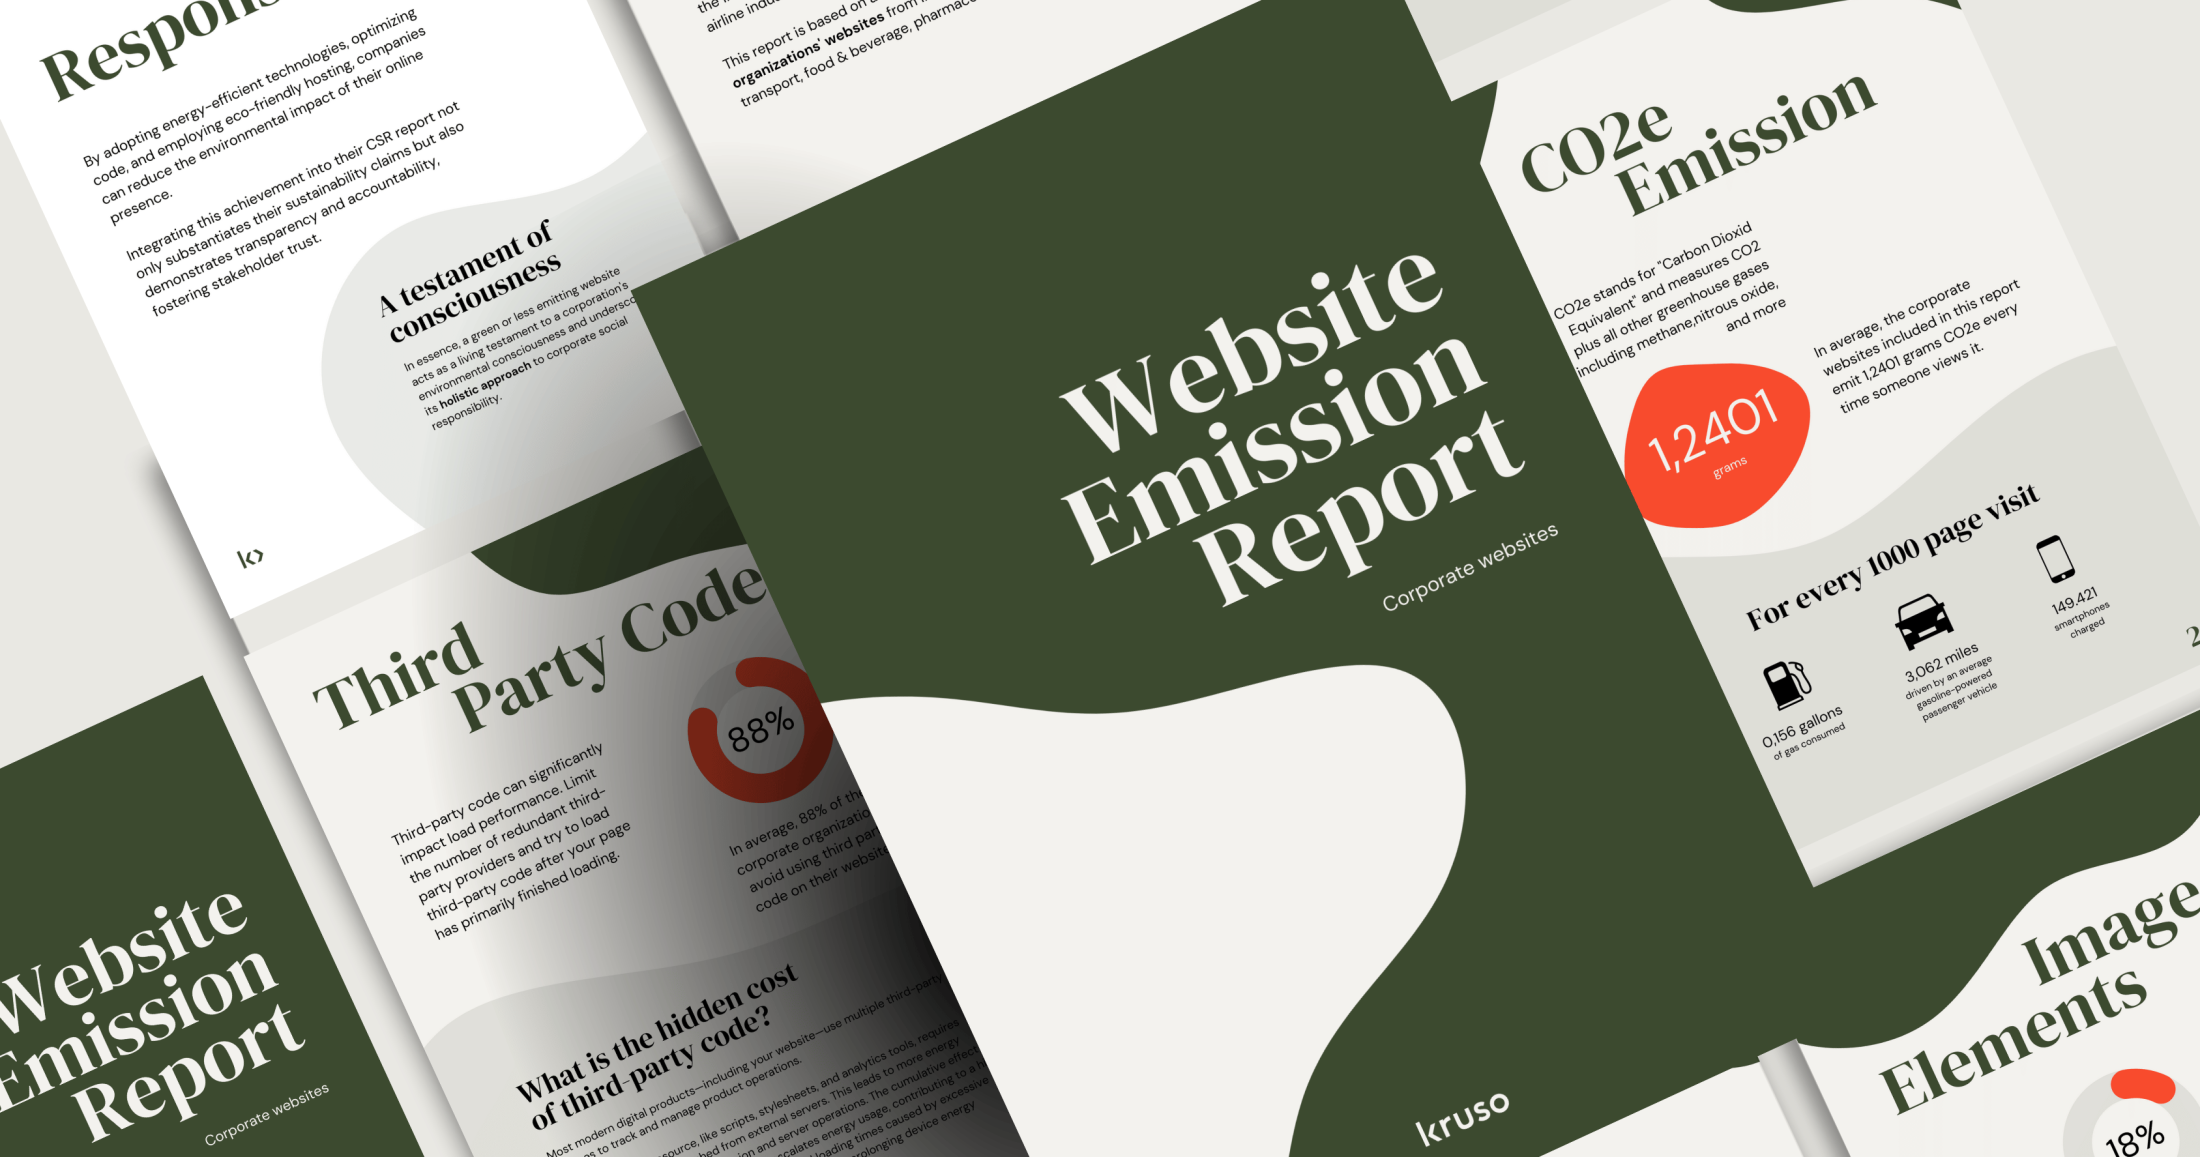 Corporate website emission report 1